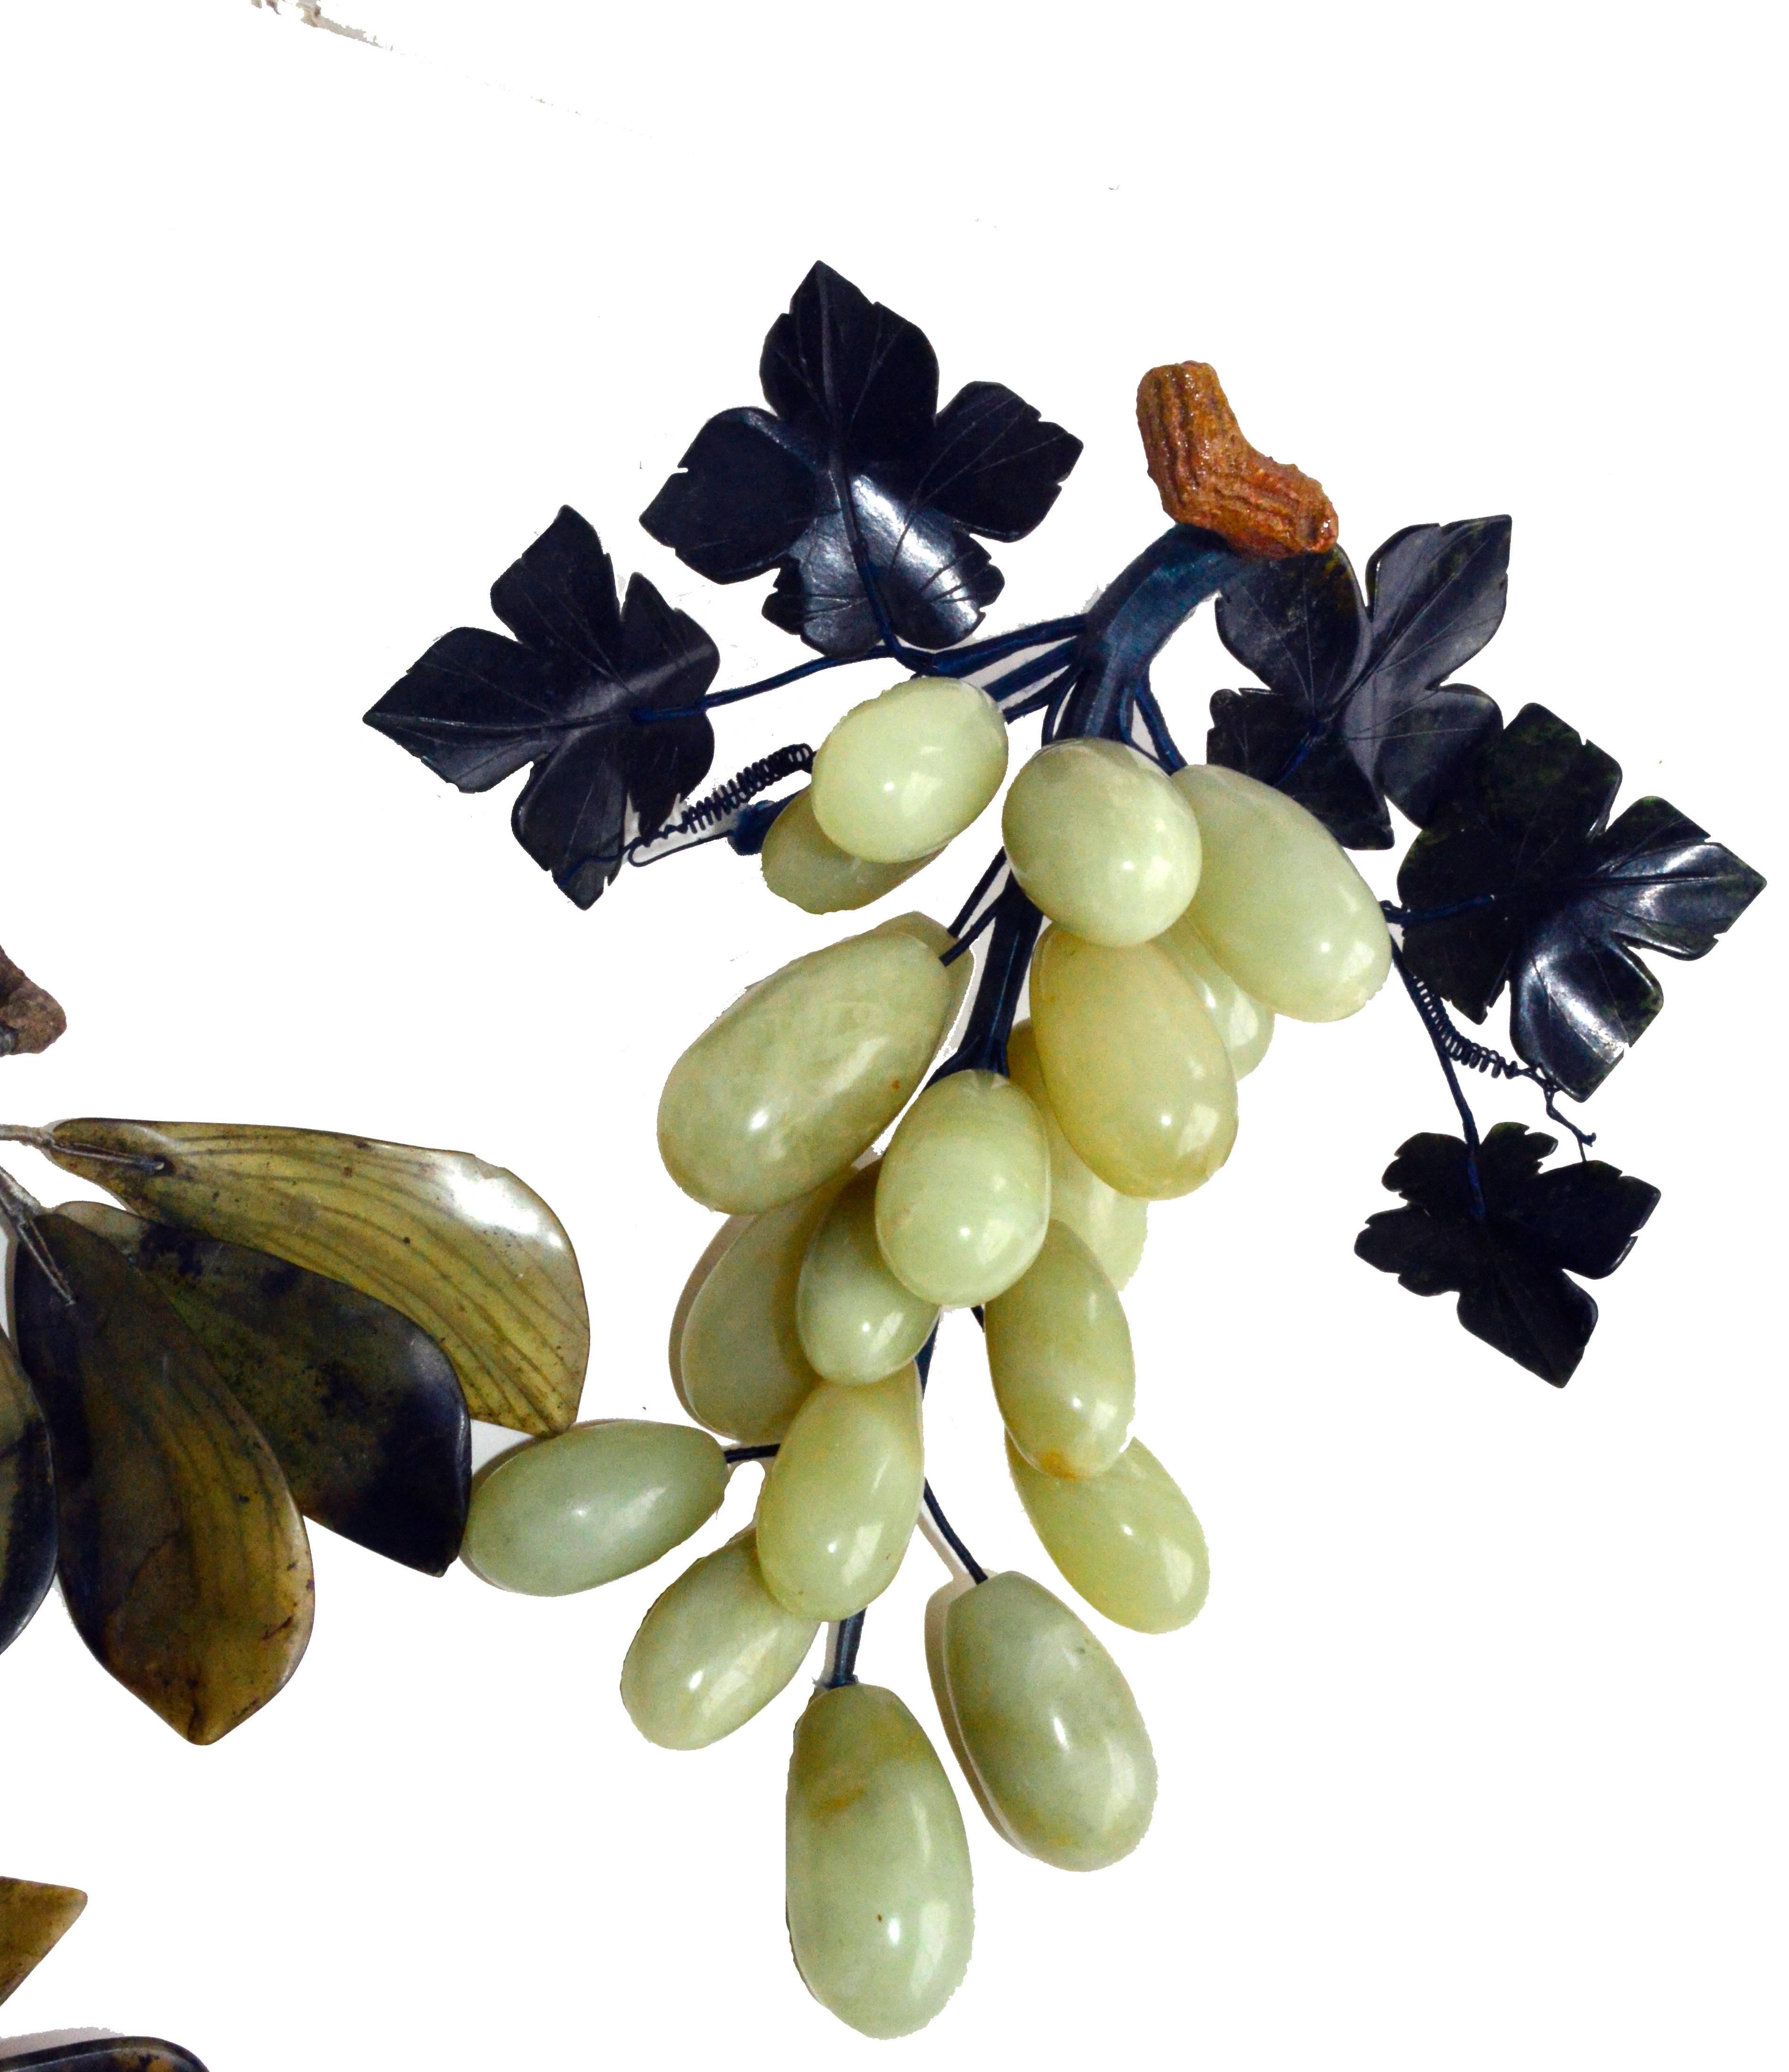 Chinese Export Semi-Precious Stone Grapes